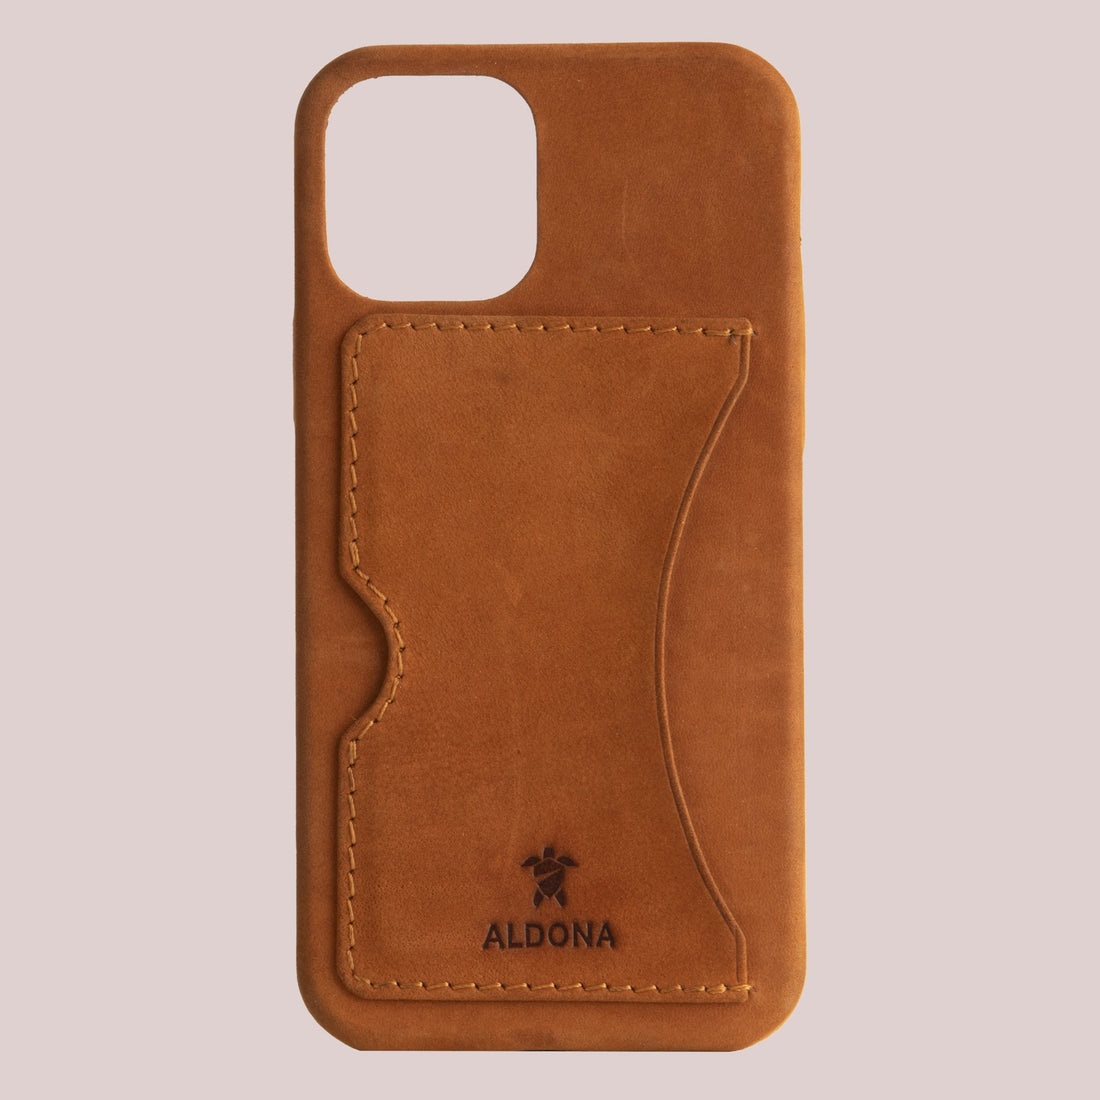 Baxter Card Case for iPhone 12 - Cognac